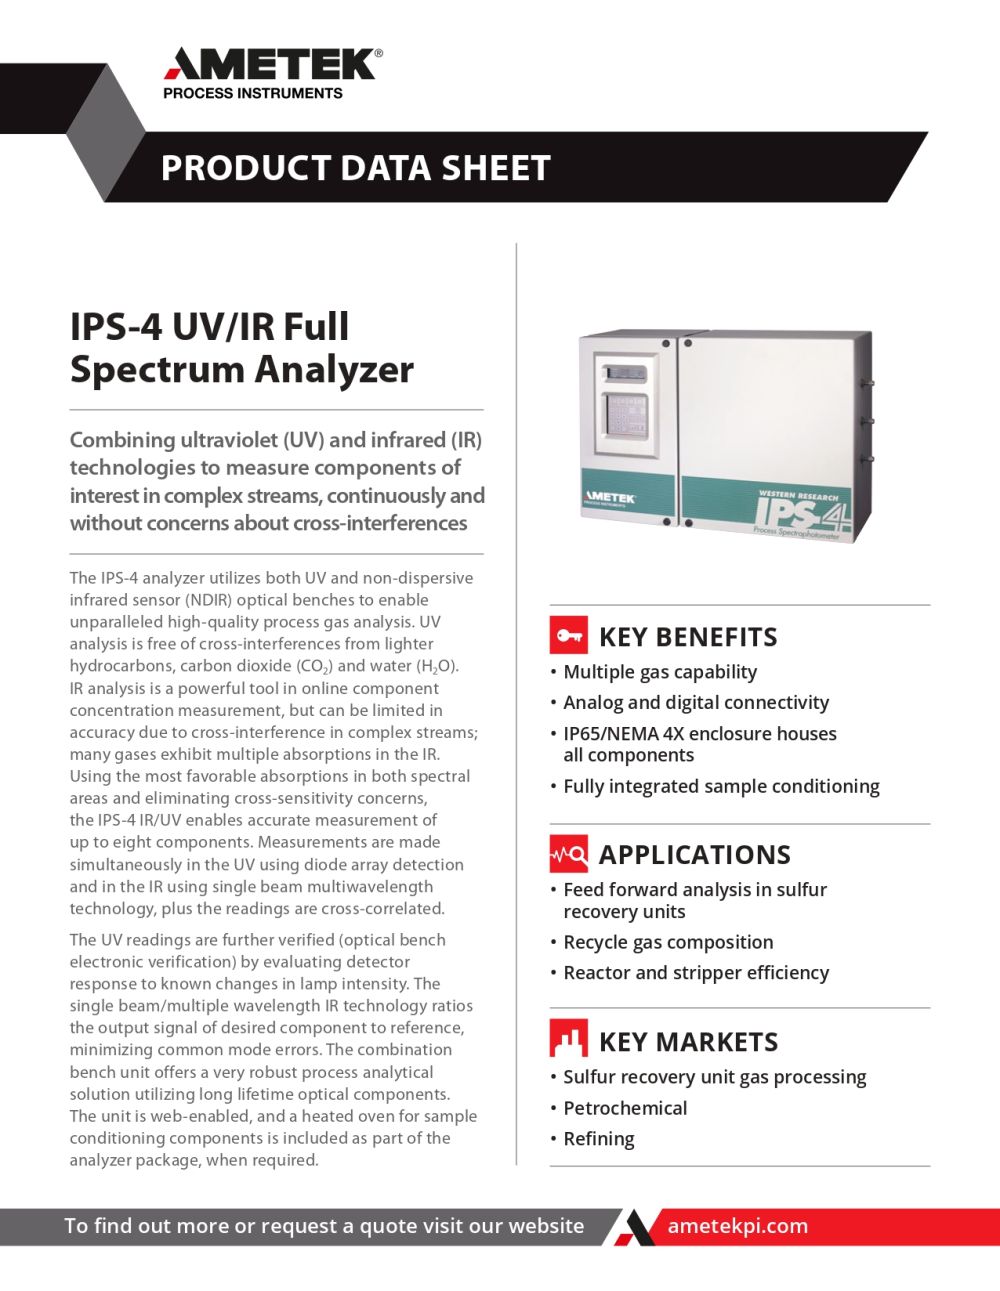 IPS-4 UV IR Full Spectrum Analyzer